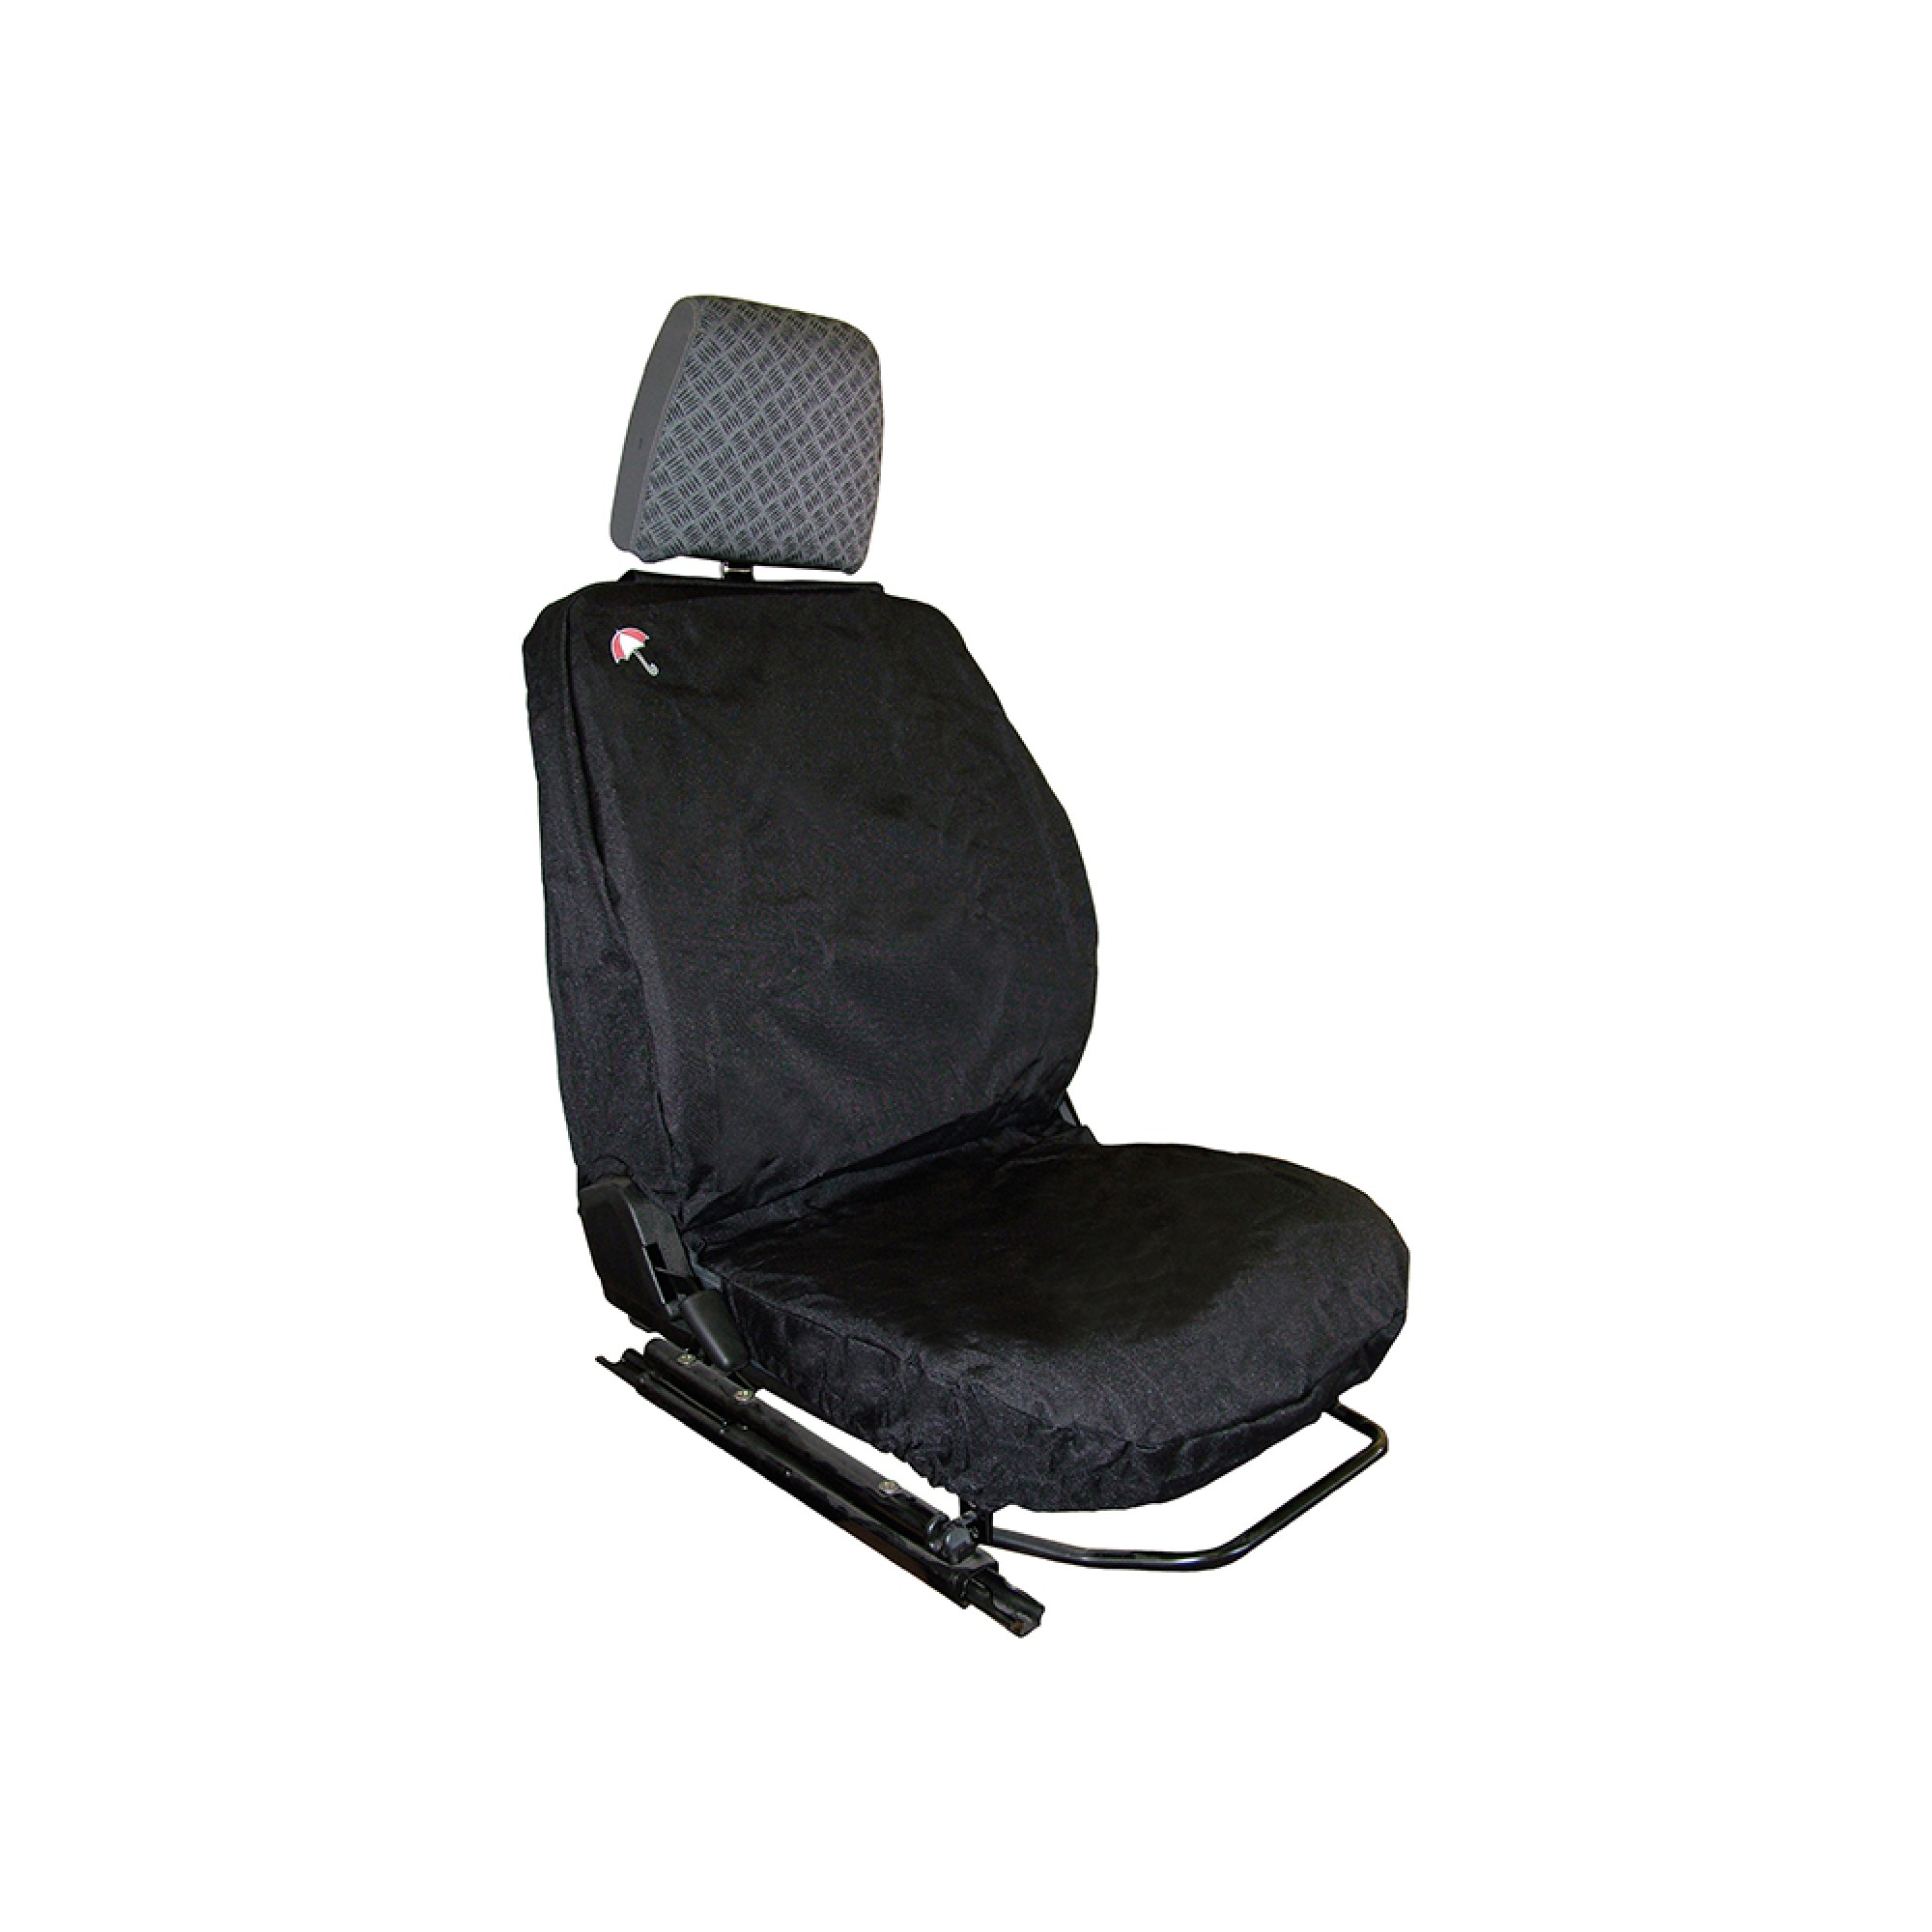 GRIFFIN MOTORSPORT™ Genuine Protective Waterproof Seat Cover in Black. 